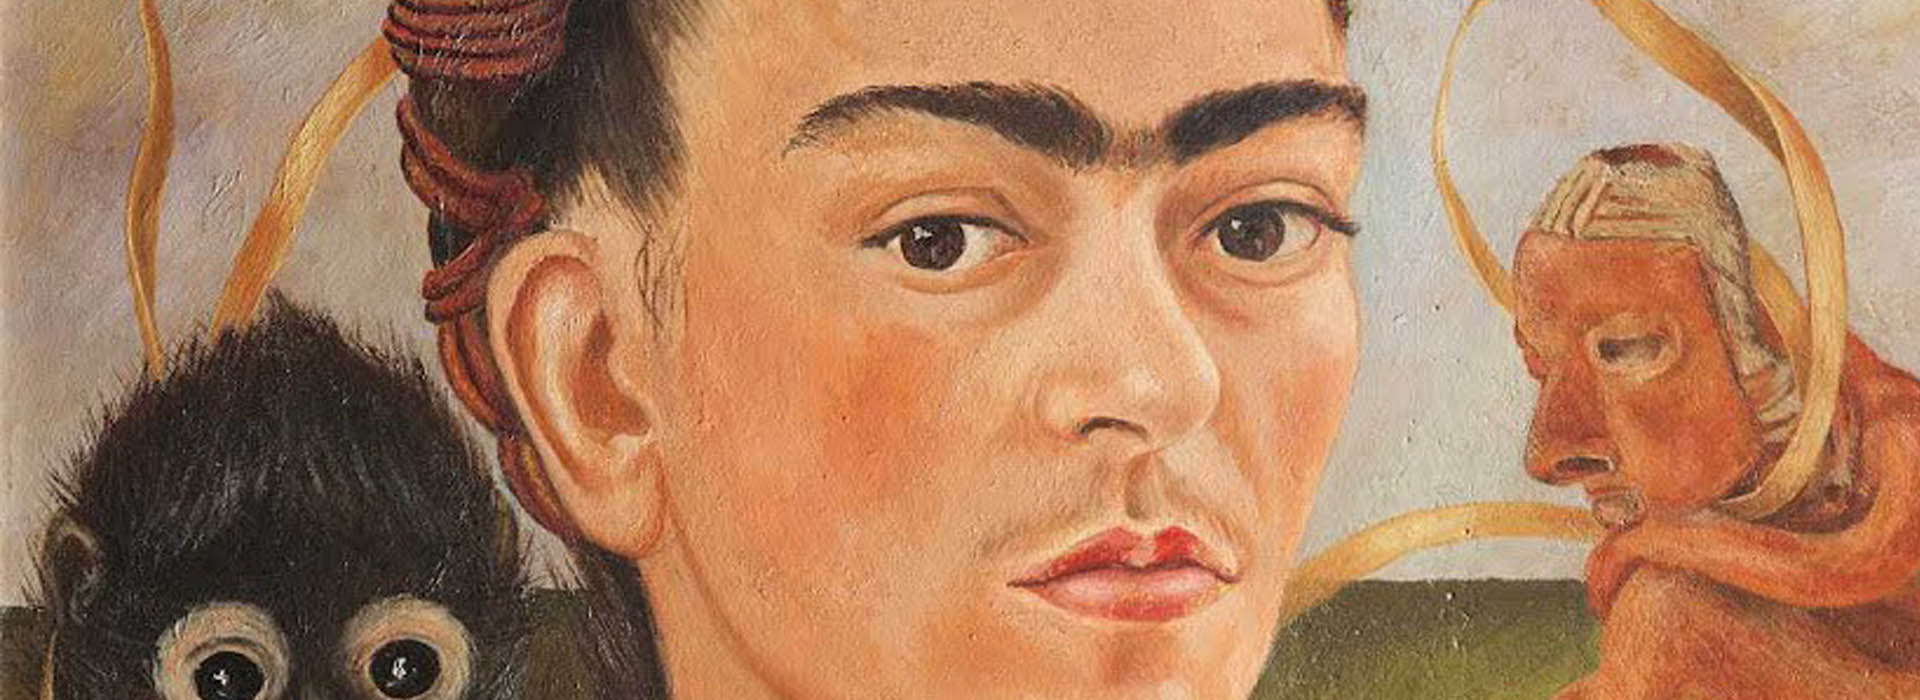 ¡VIVA LA VIDA! Frida Kahlo and Diego Rivera